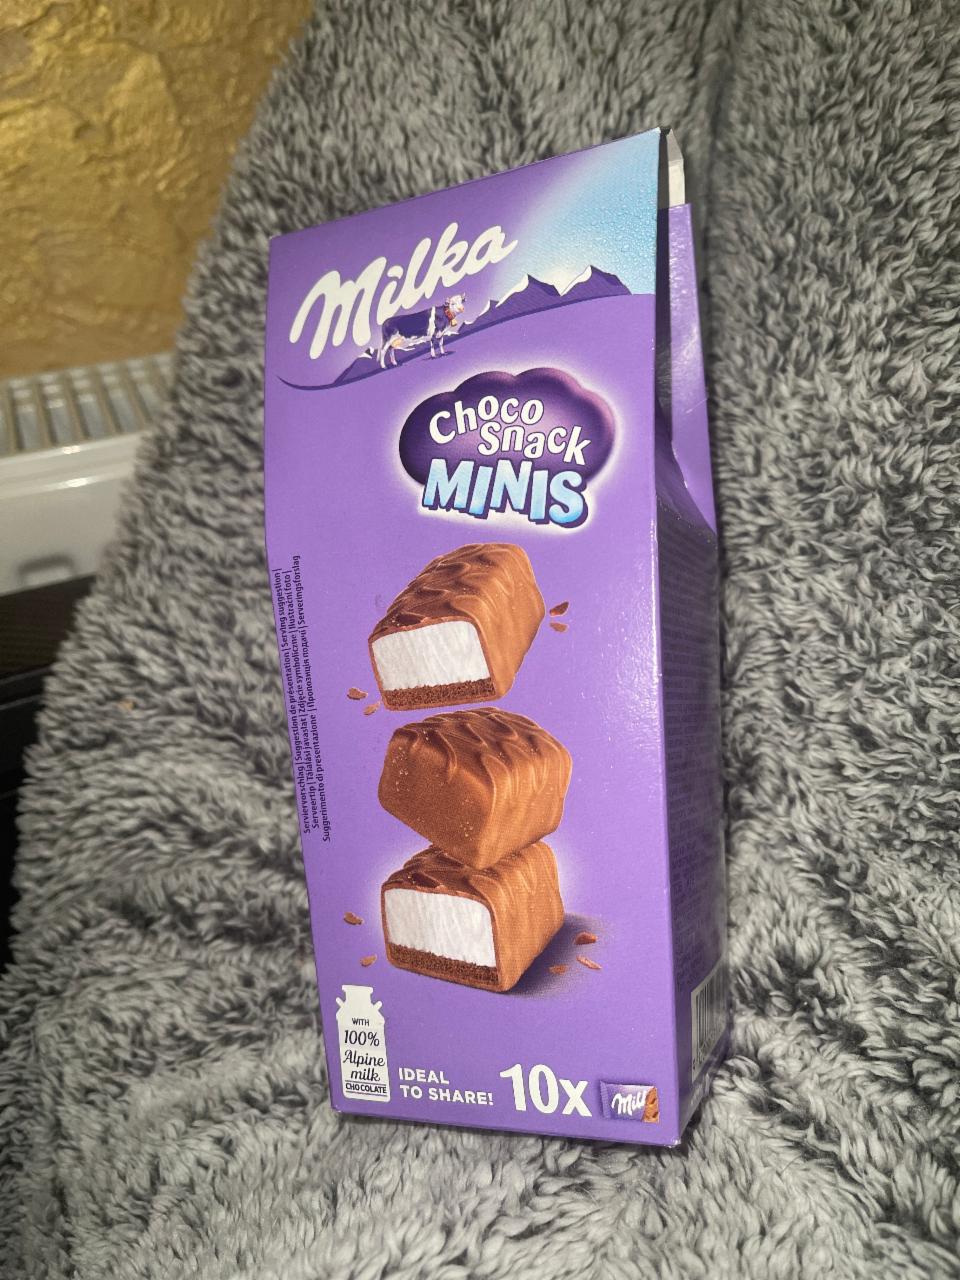 Фото - Мини шоколадные снеки с кремом choco snack minis milks Milka